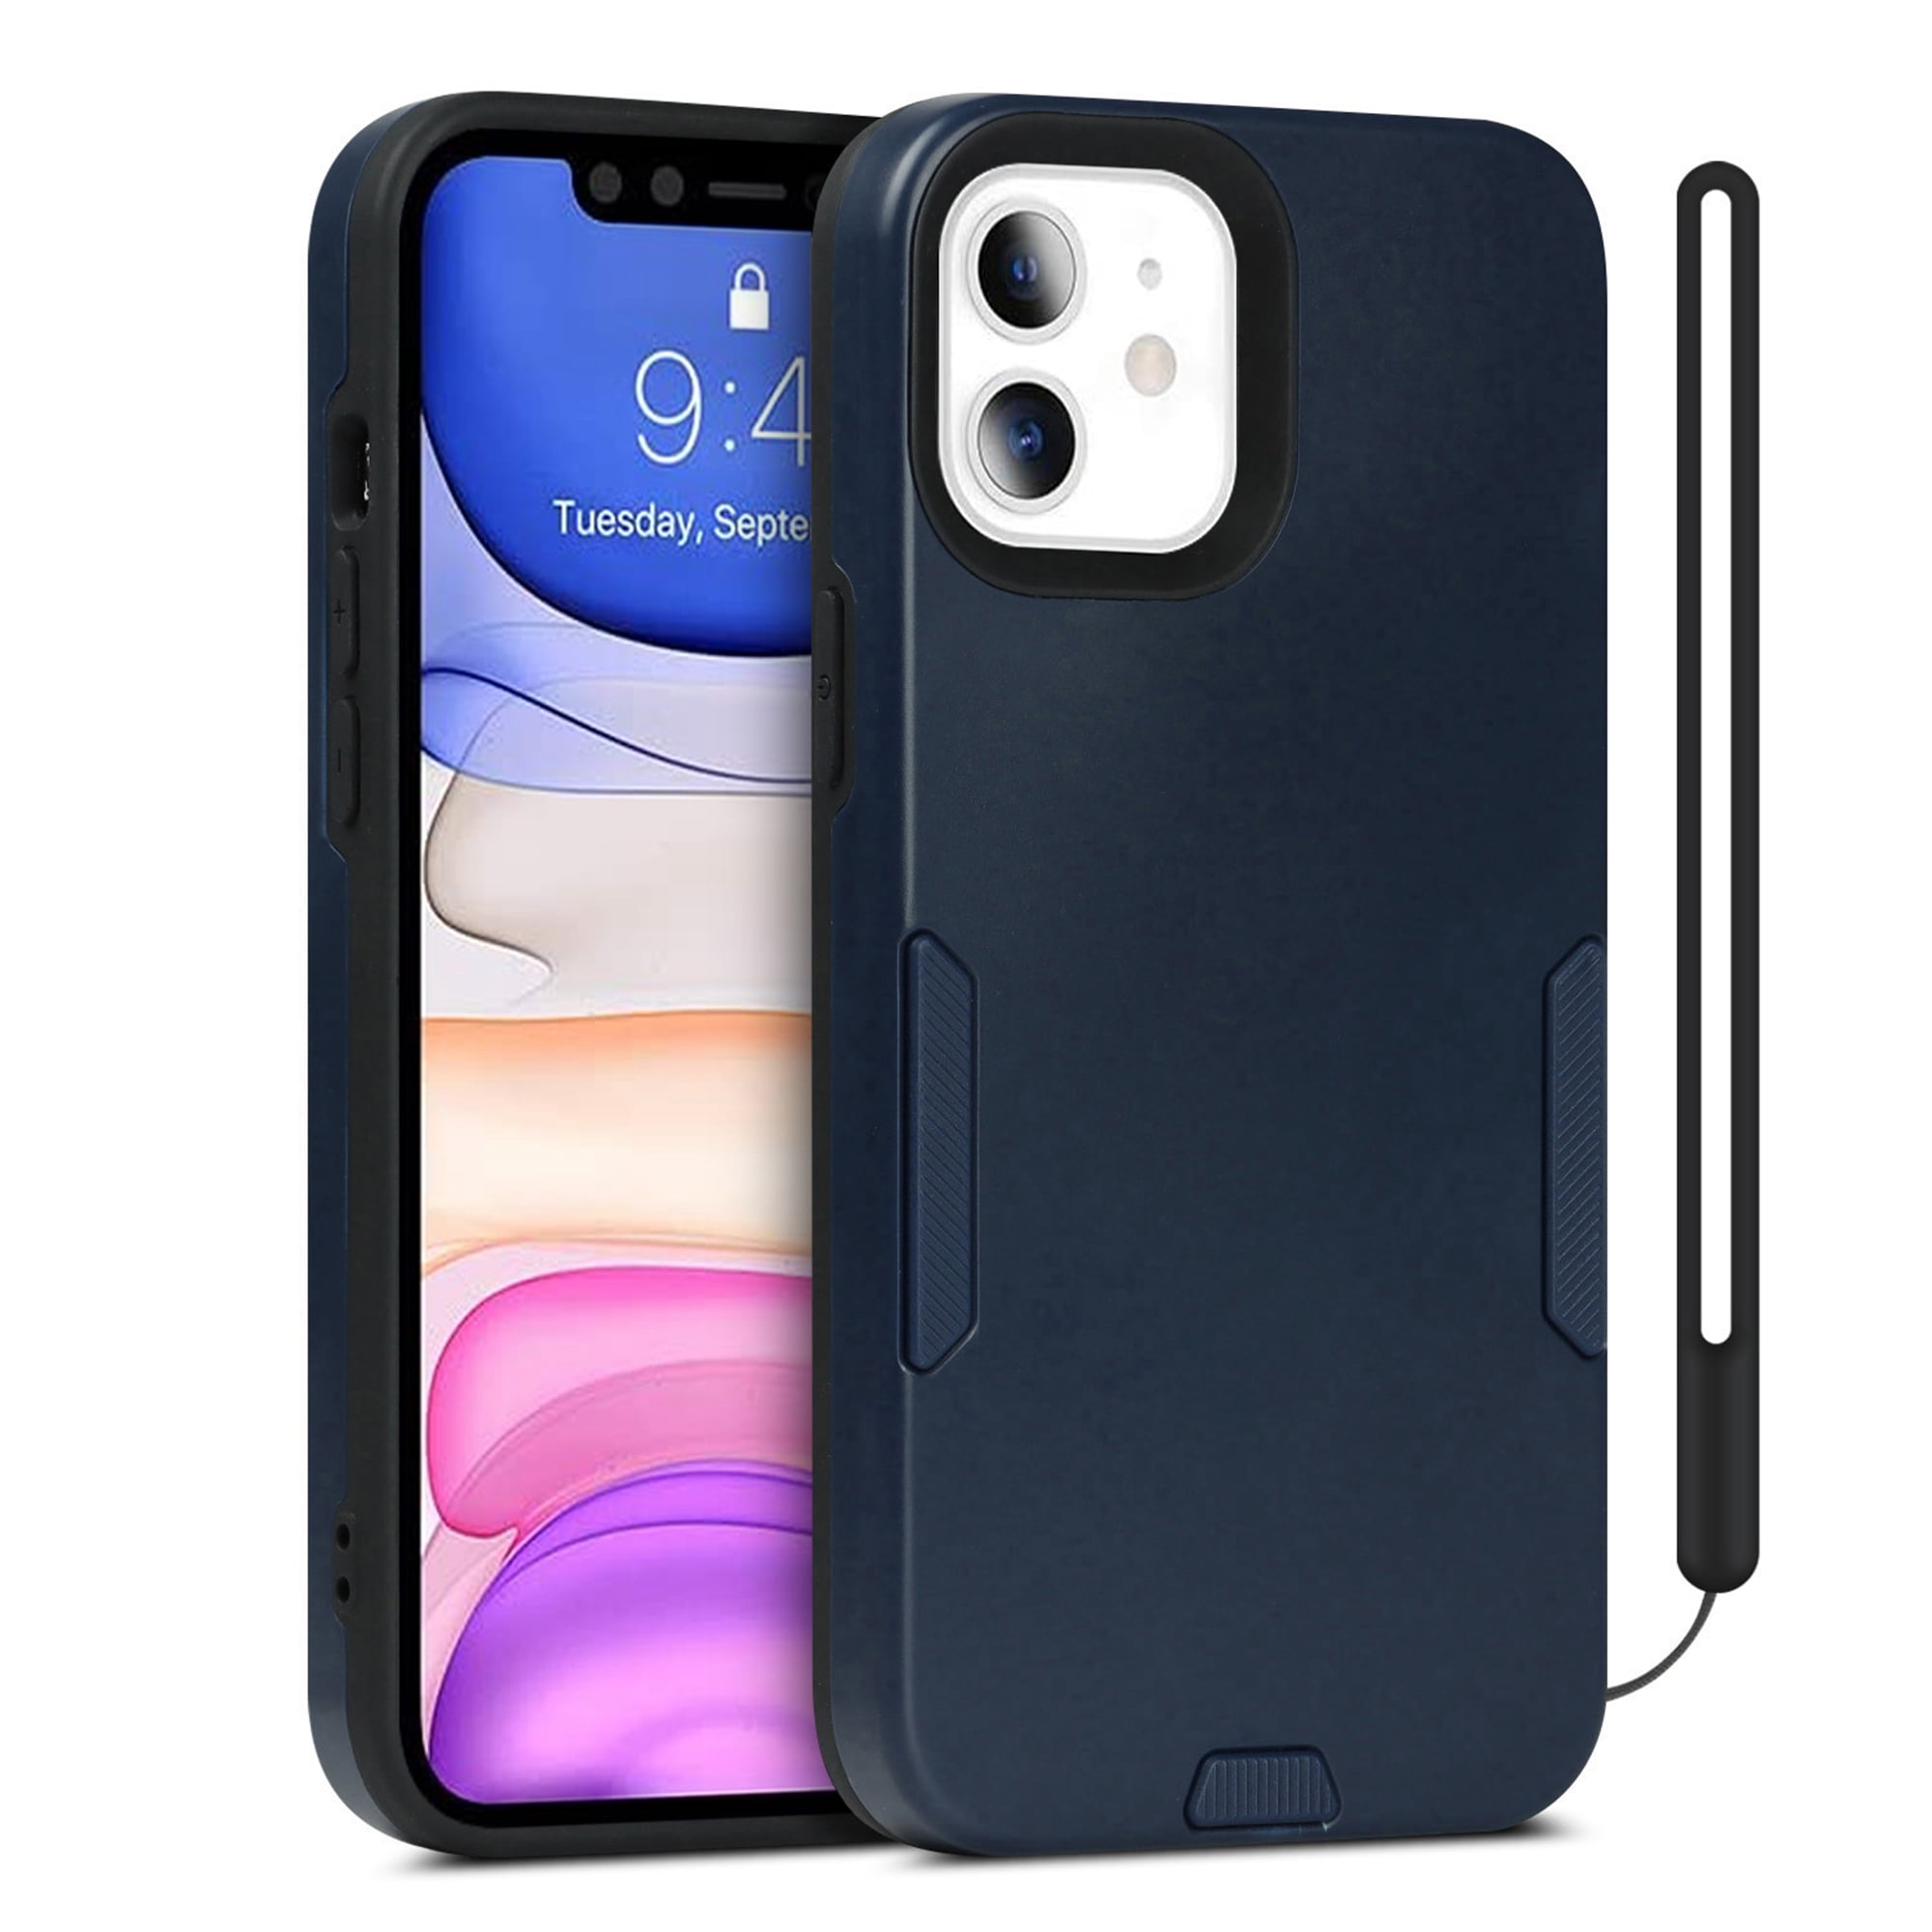 Pack Protector Iphone 11 Bumper + Cristal Templado con Ofertas en Carrefour